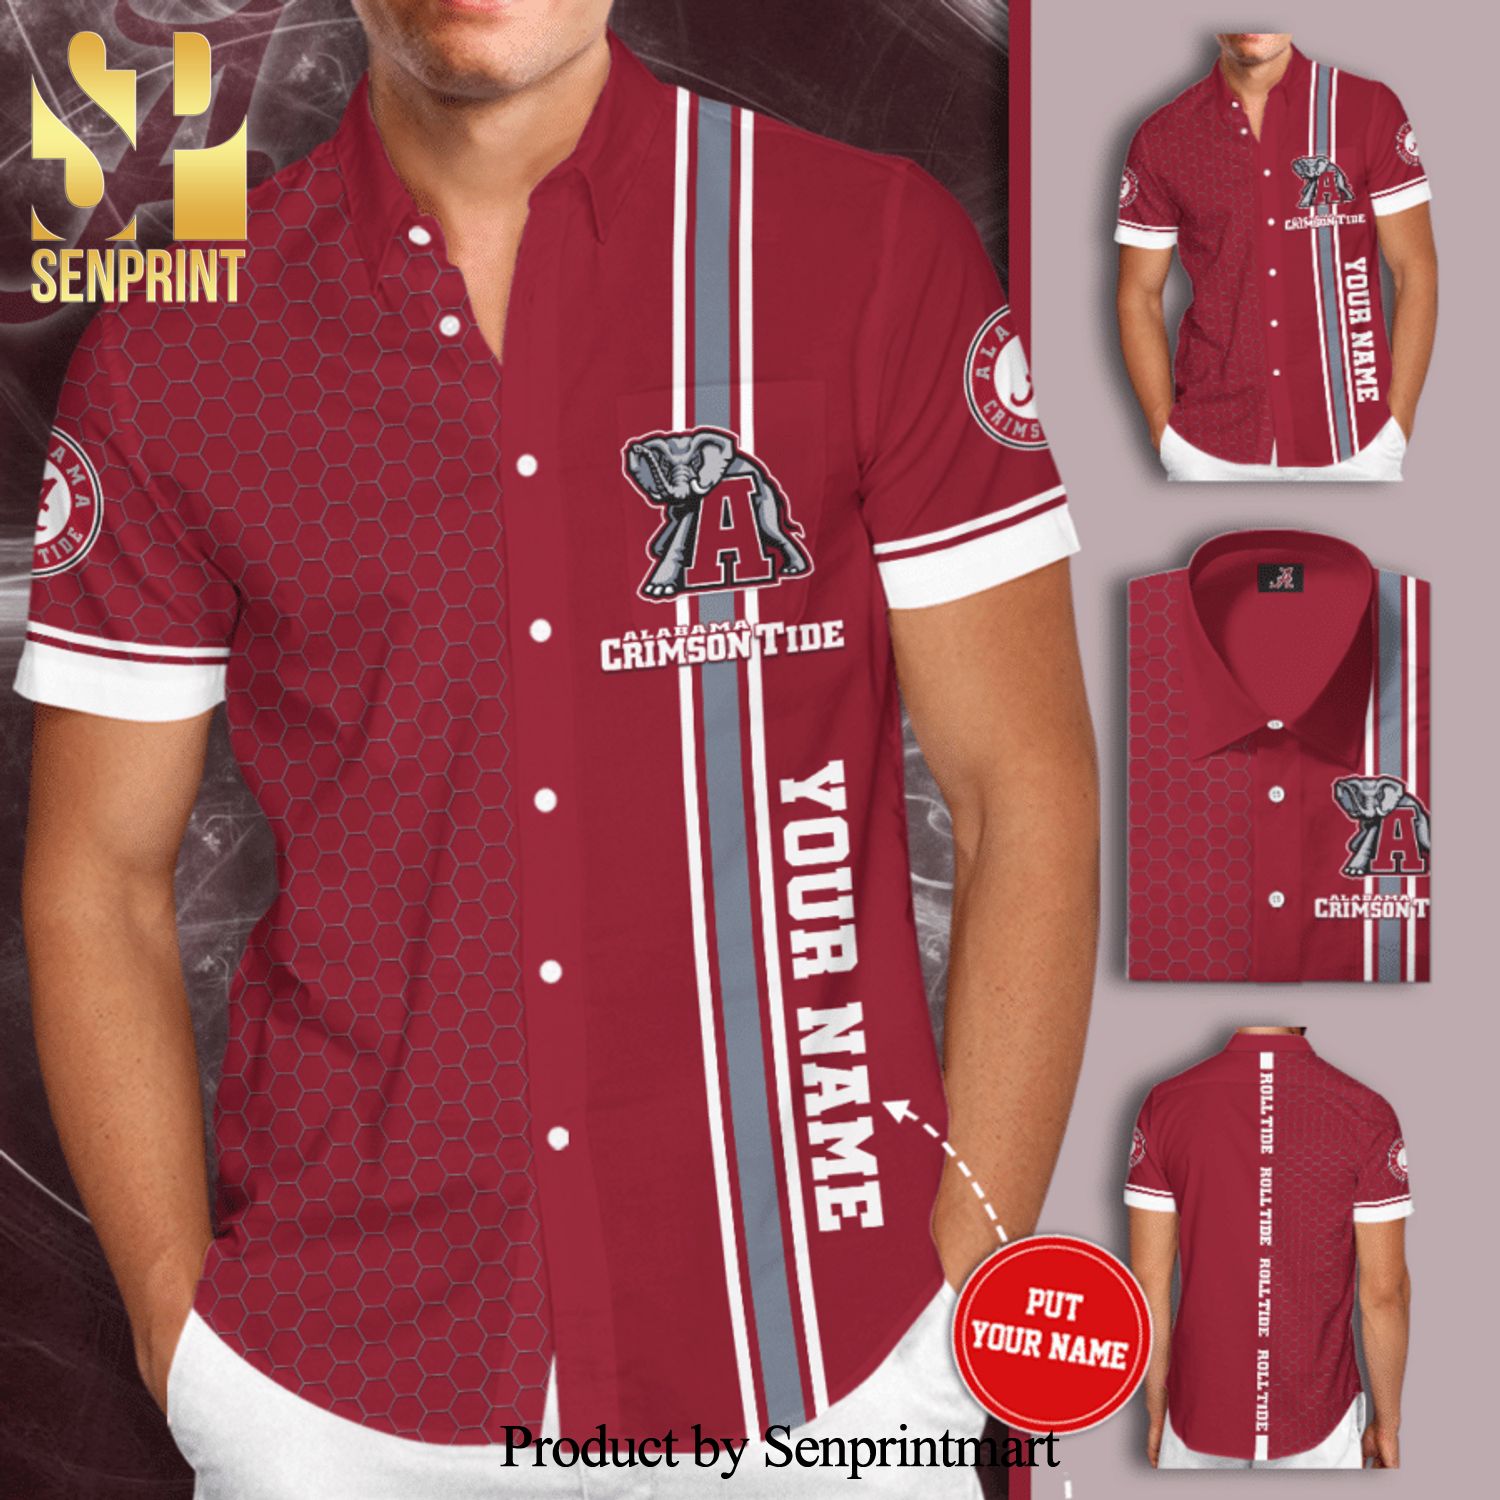 Personalized Alabama Crimson Tide Football Full Printing Hawaiian Shirt – Red